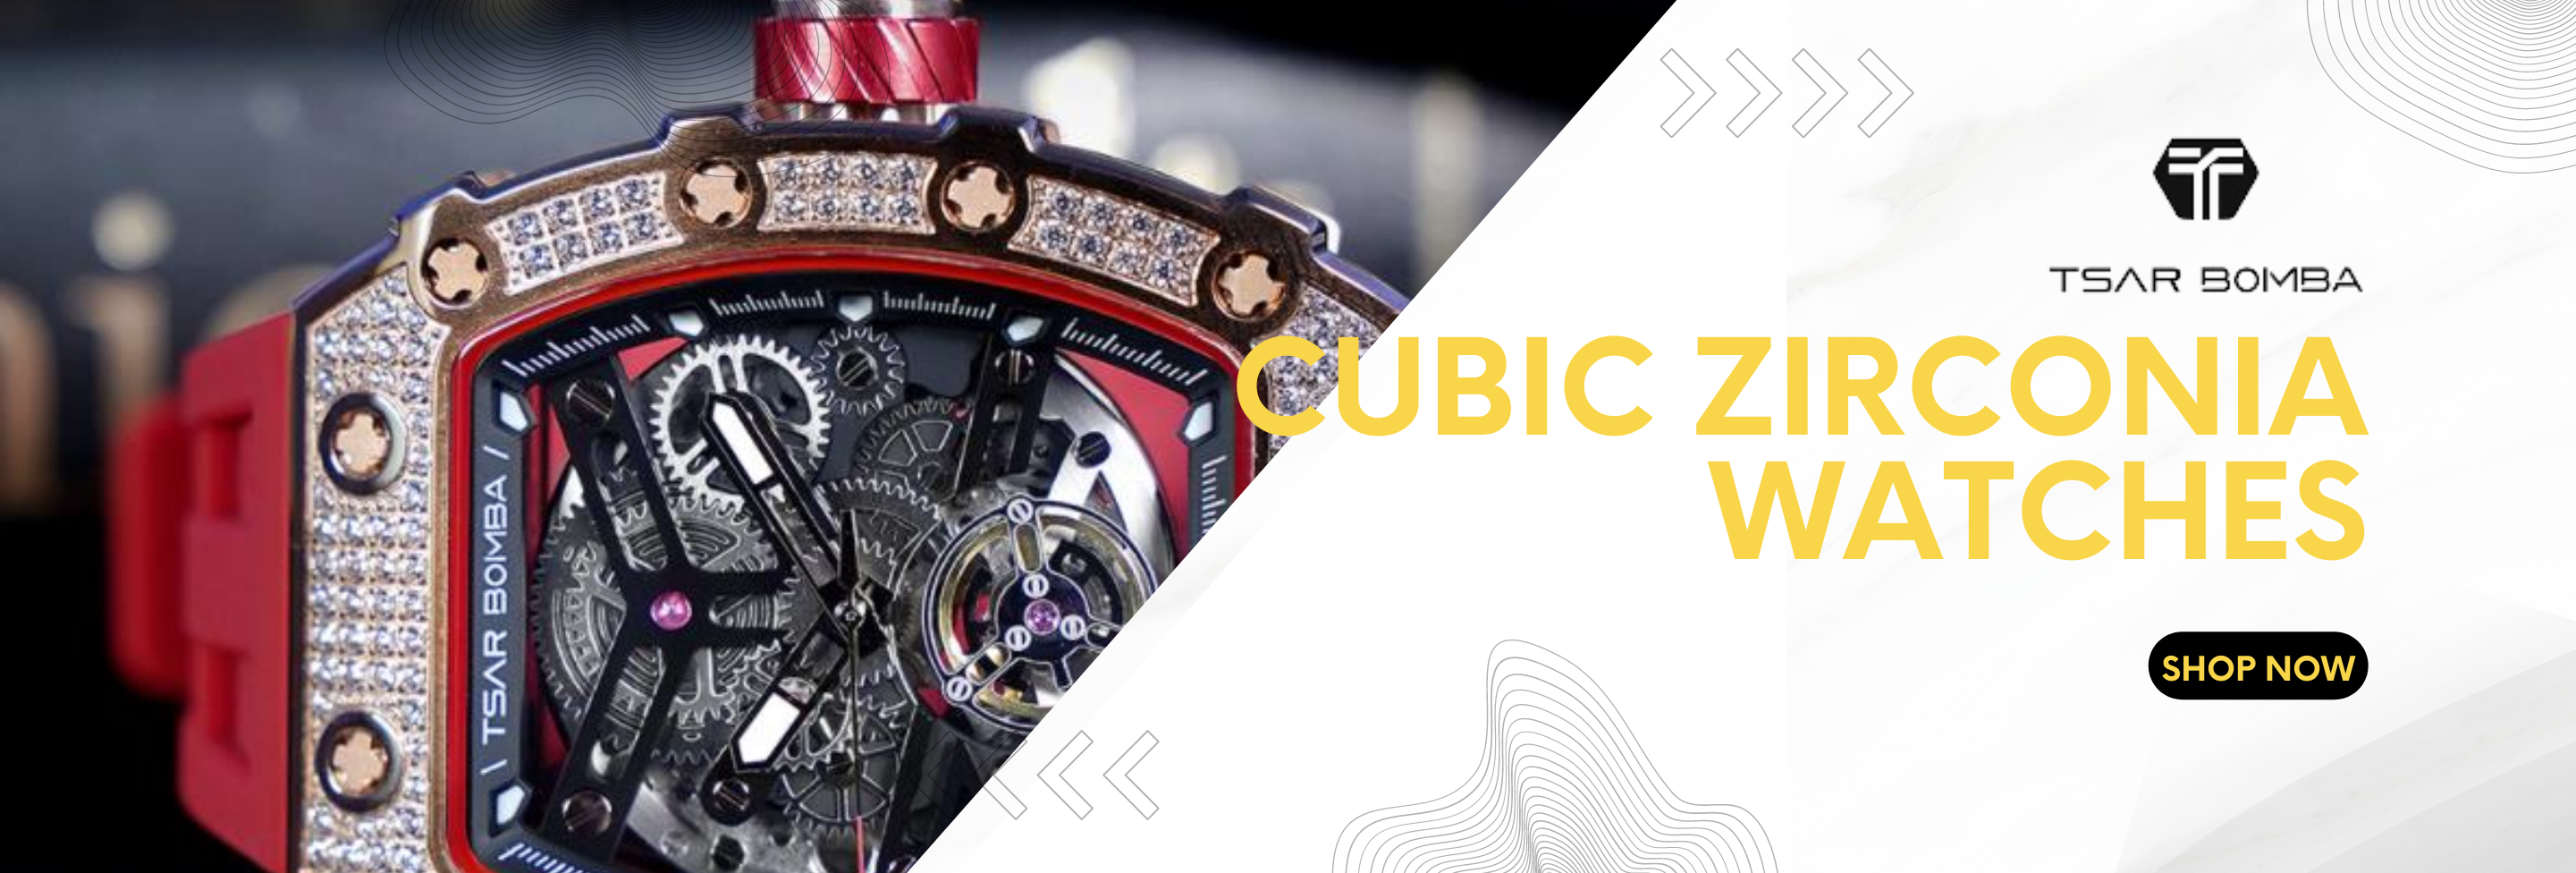 Cubic Zirconia Watches | Tsar Bomba